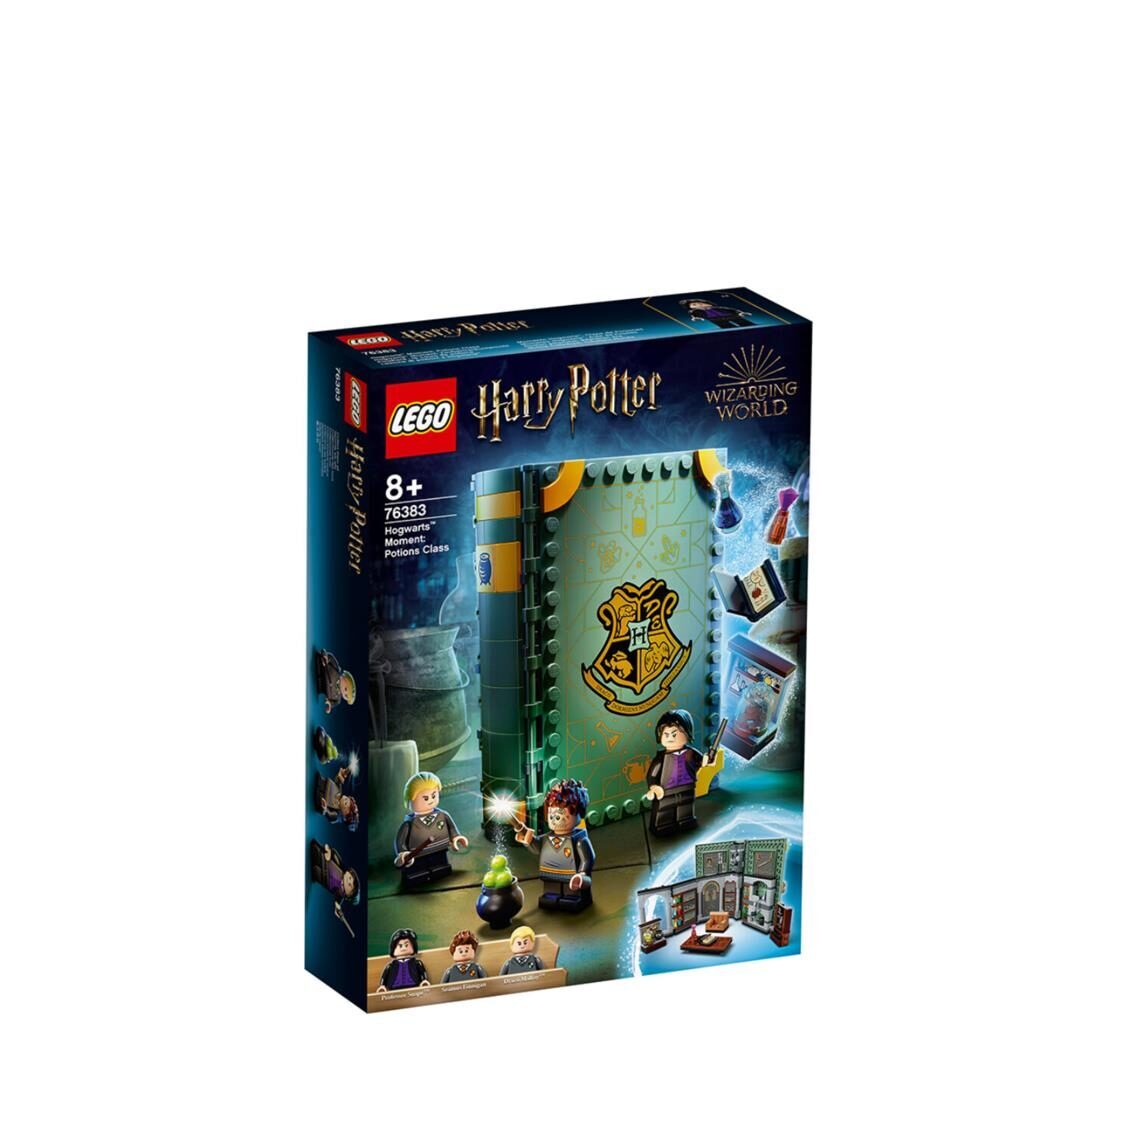 LEGO Harry Potter - Hogwarts Moment Potions Class 76383